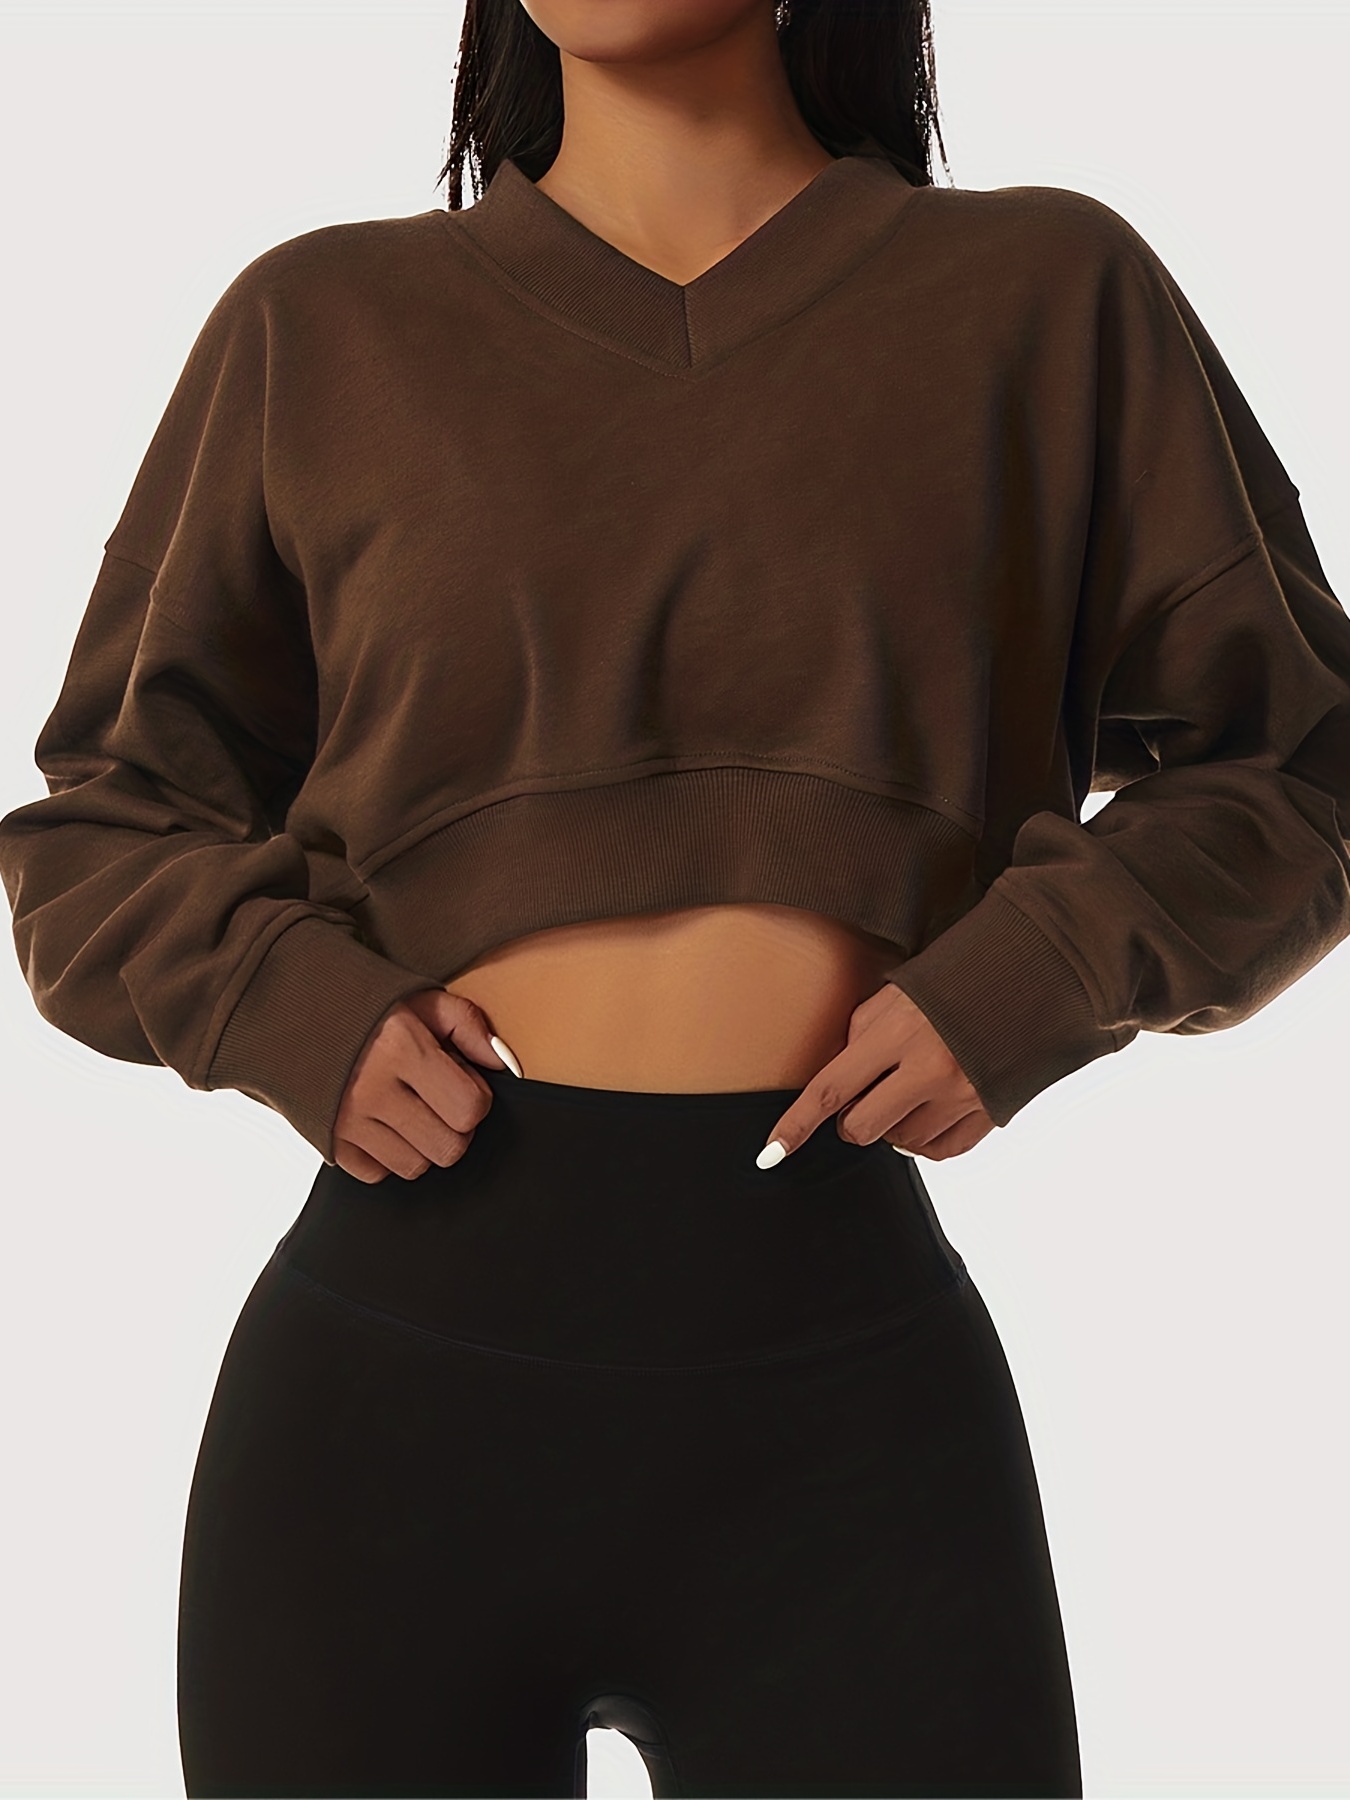 Women's Cropped Sweatshirts